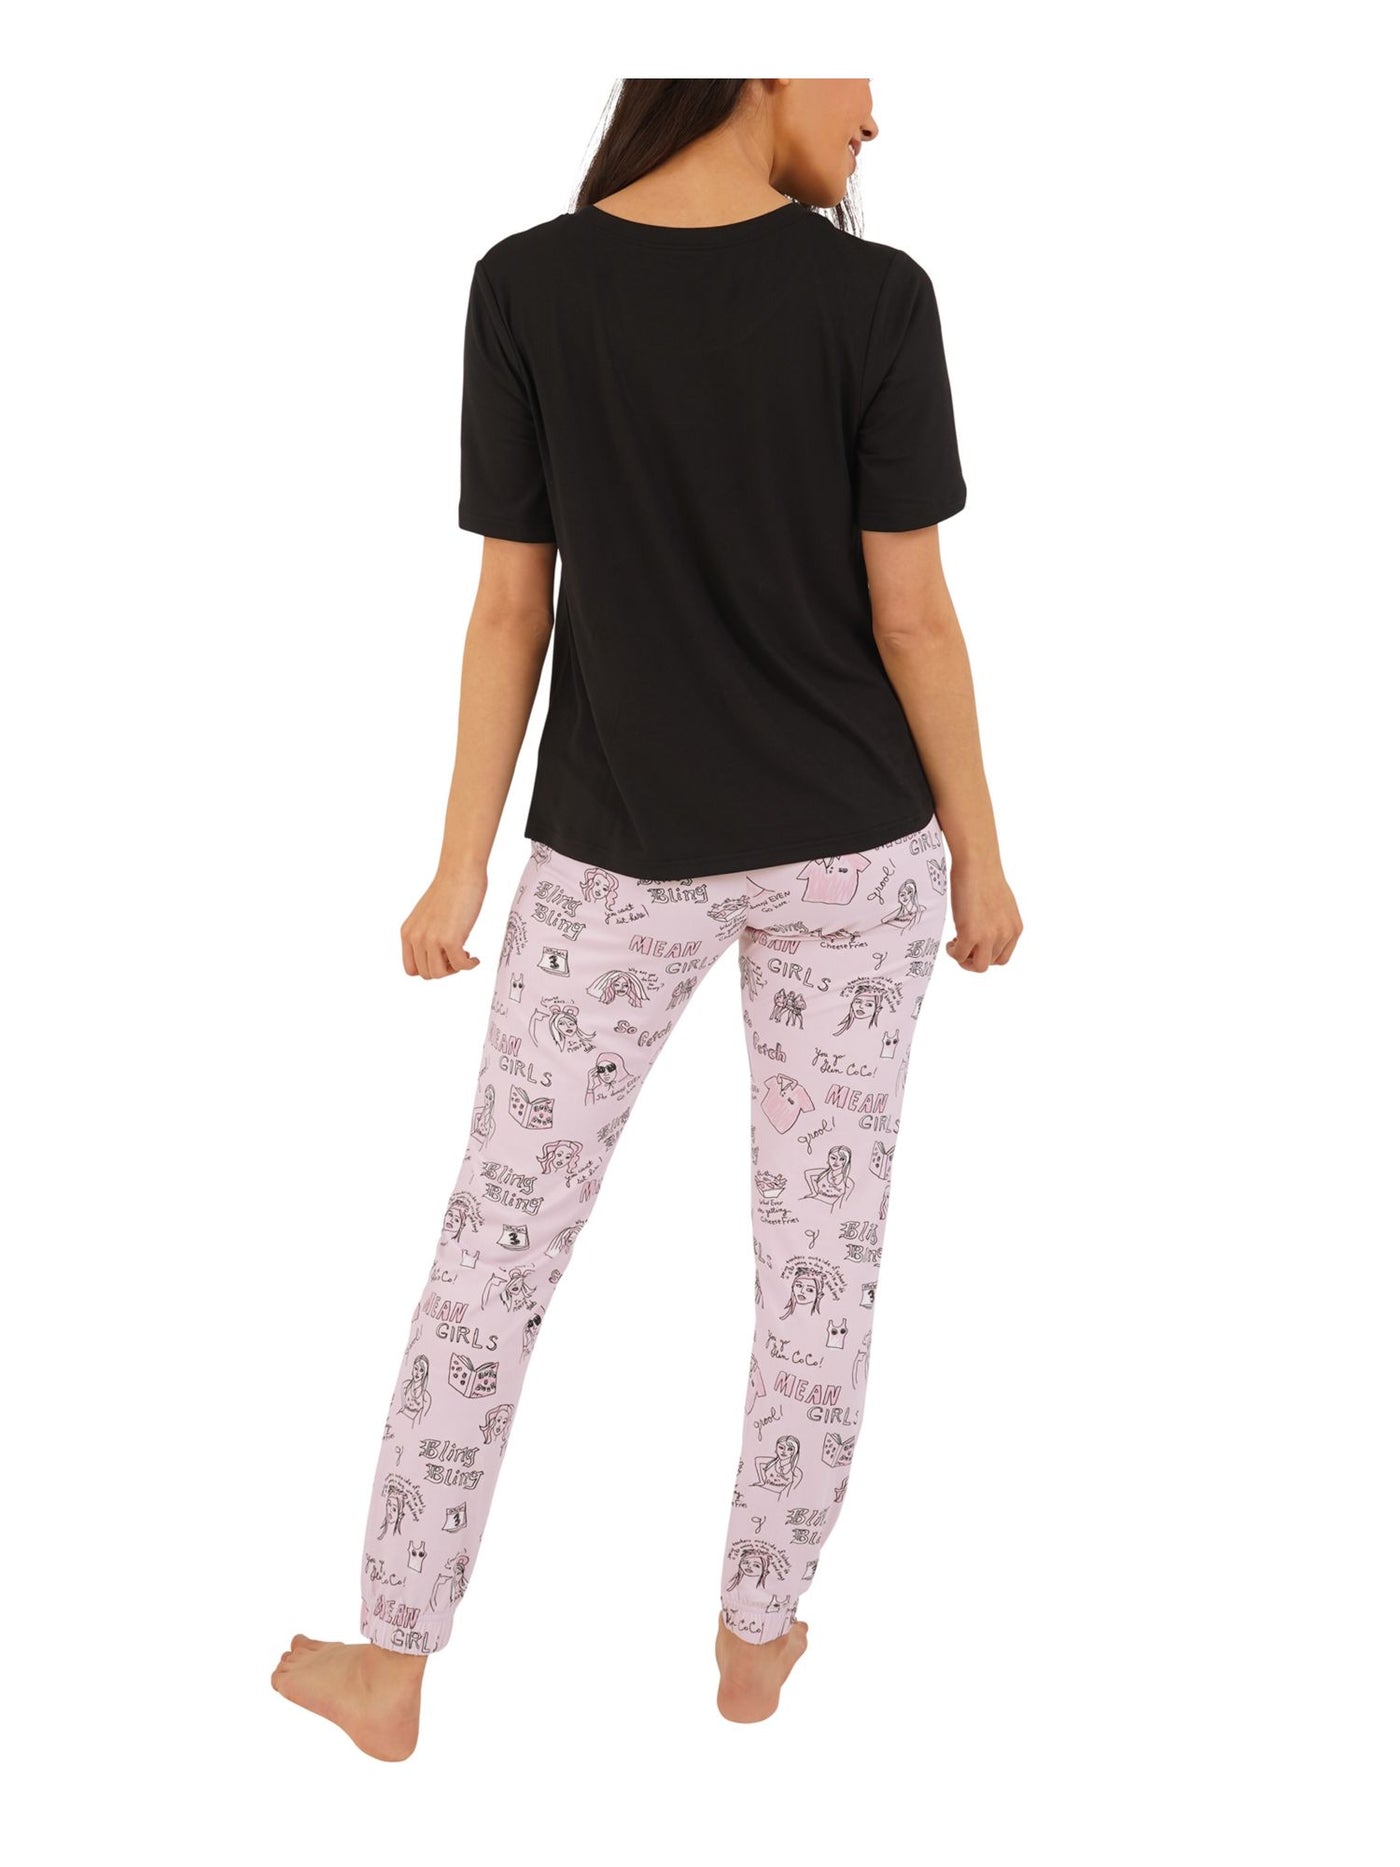 RETROSPECTIVE CO. Womens Pink Graphic Elastic Band Short Sleeve T-Shirt Top Cuffed Pants Pajamas L